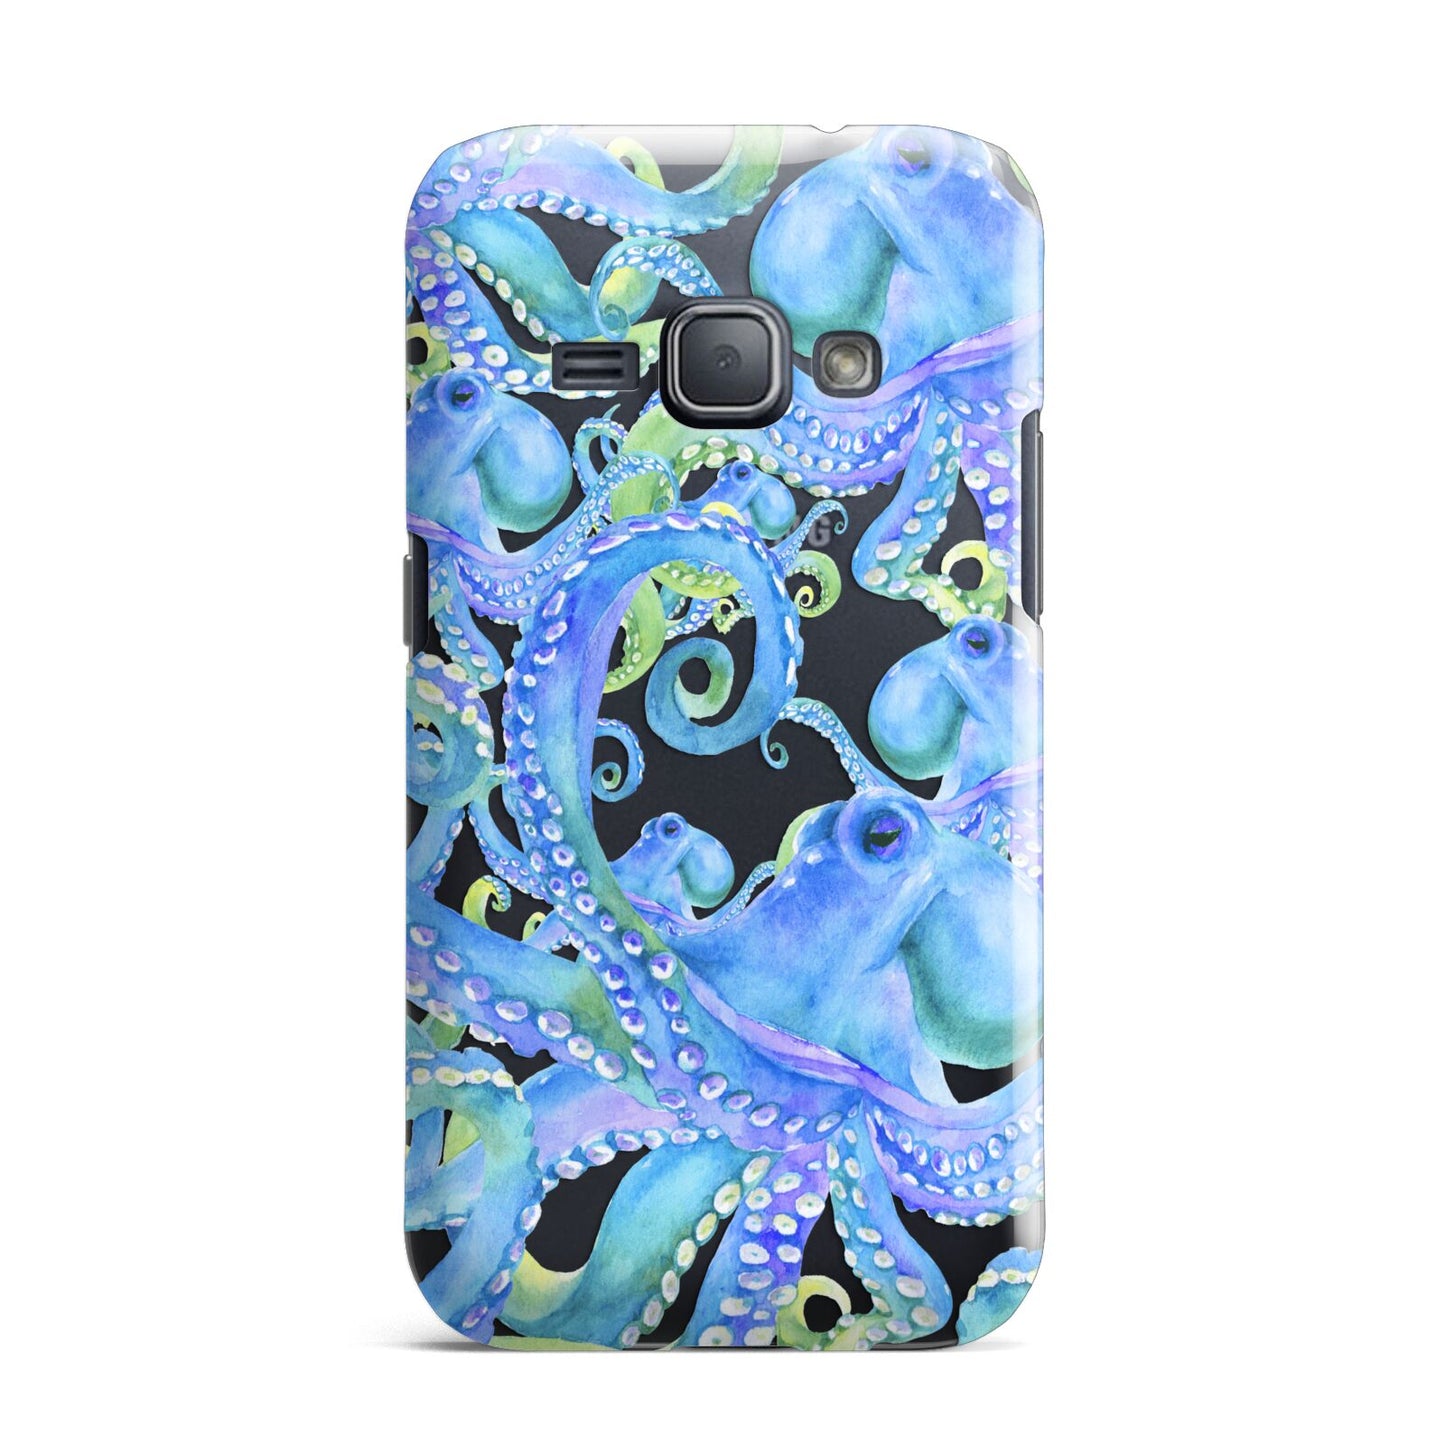 Octopus Samsung Galaxy J1 2016 Case